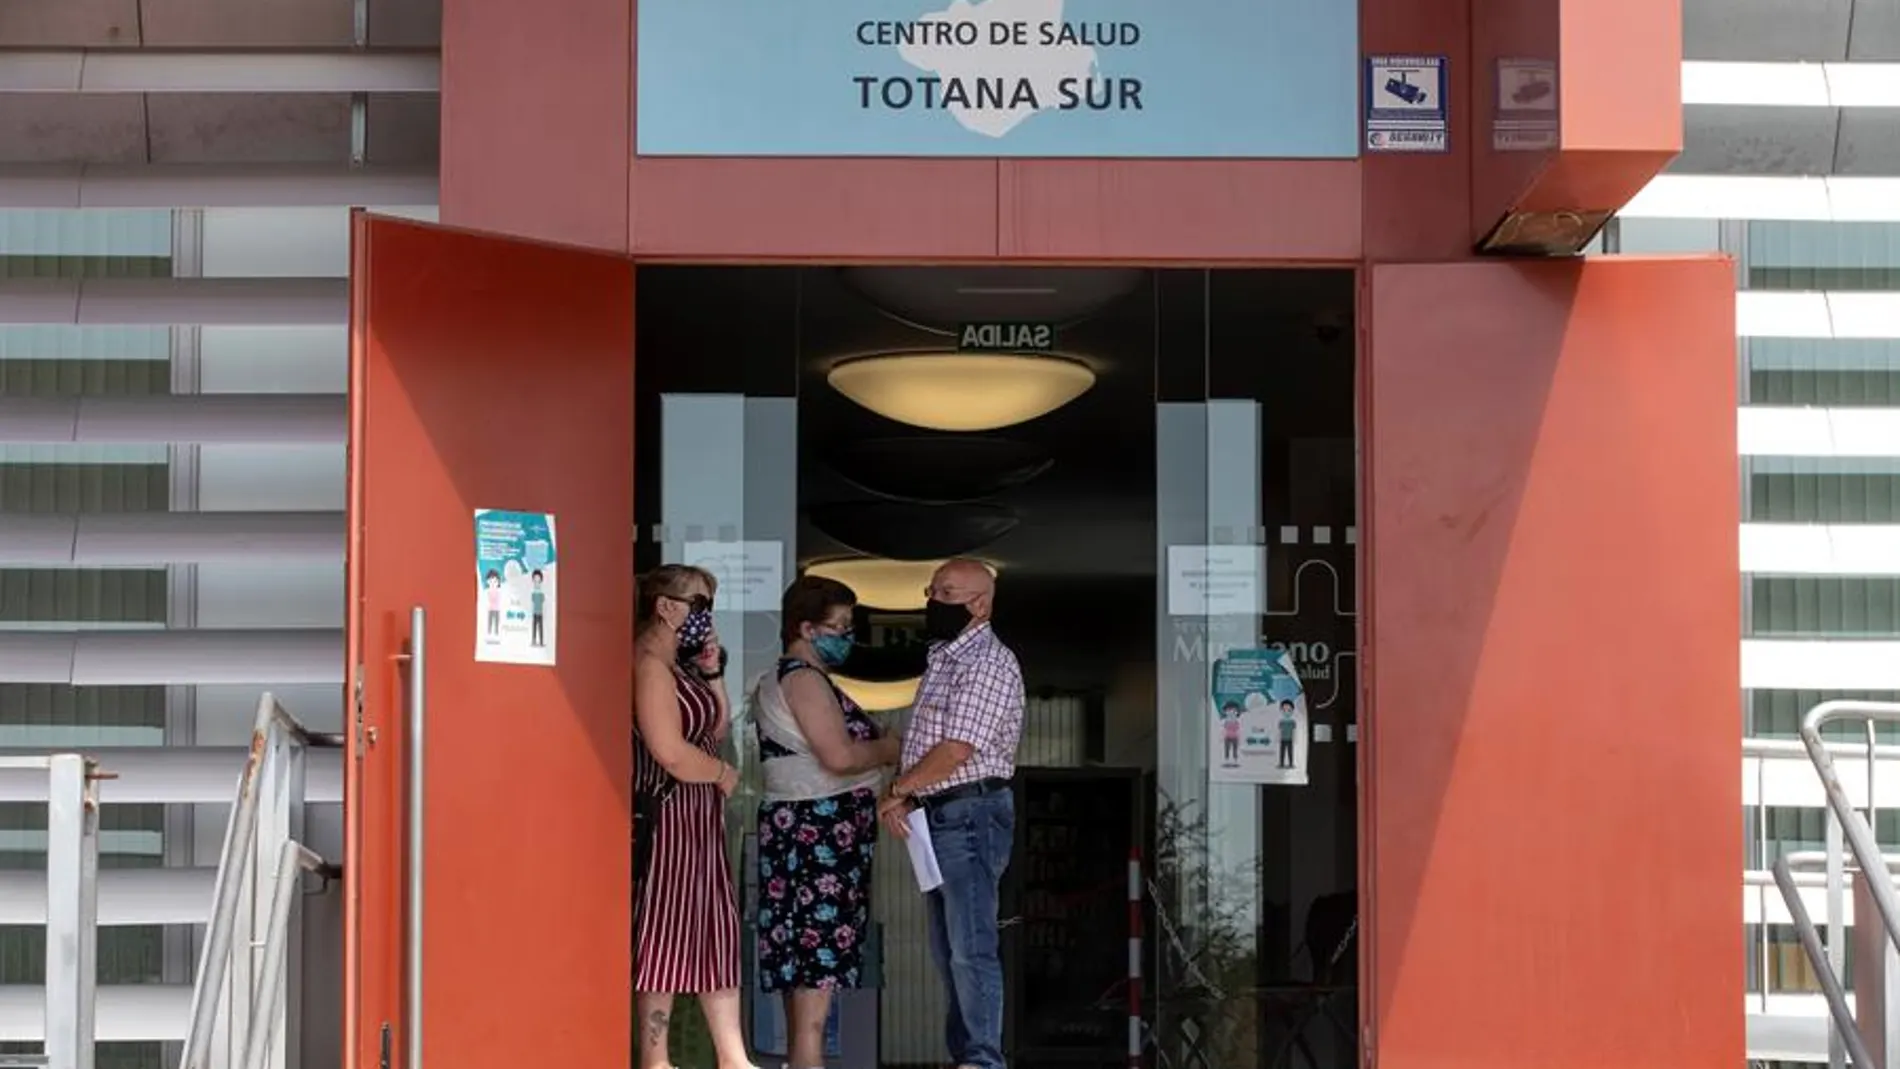 Centro de salud en Totana, Murcia